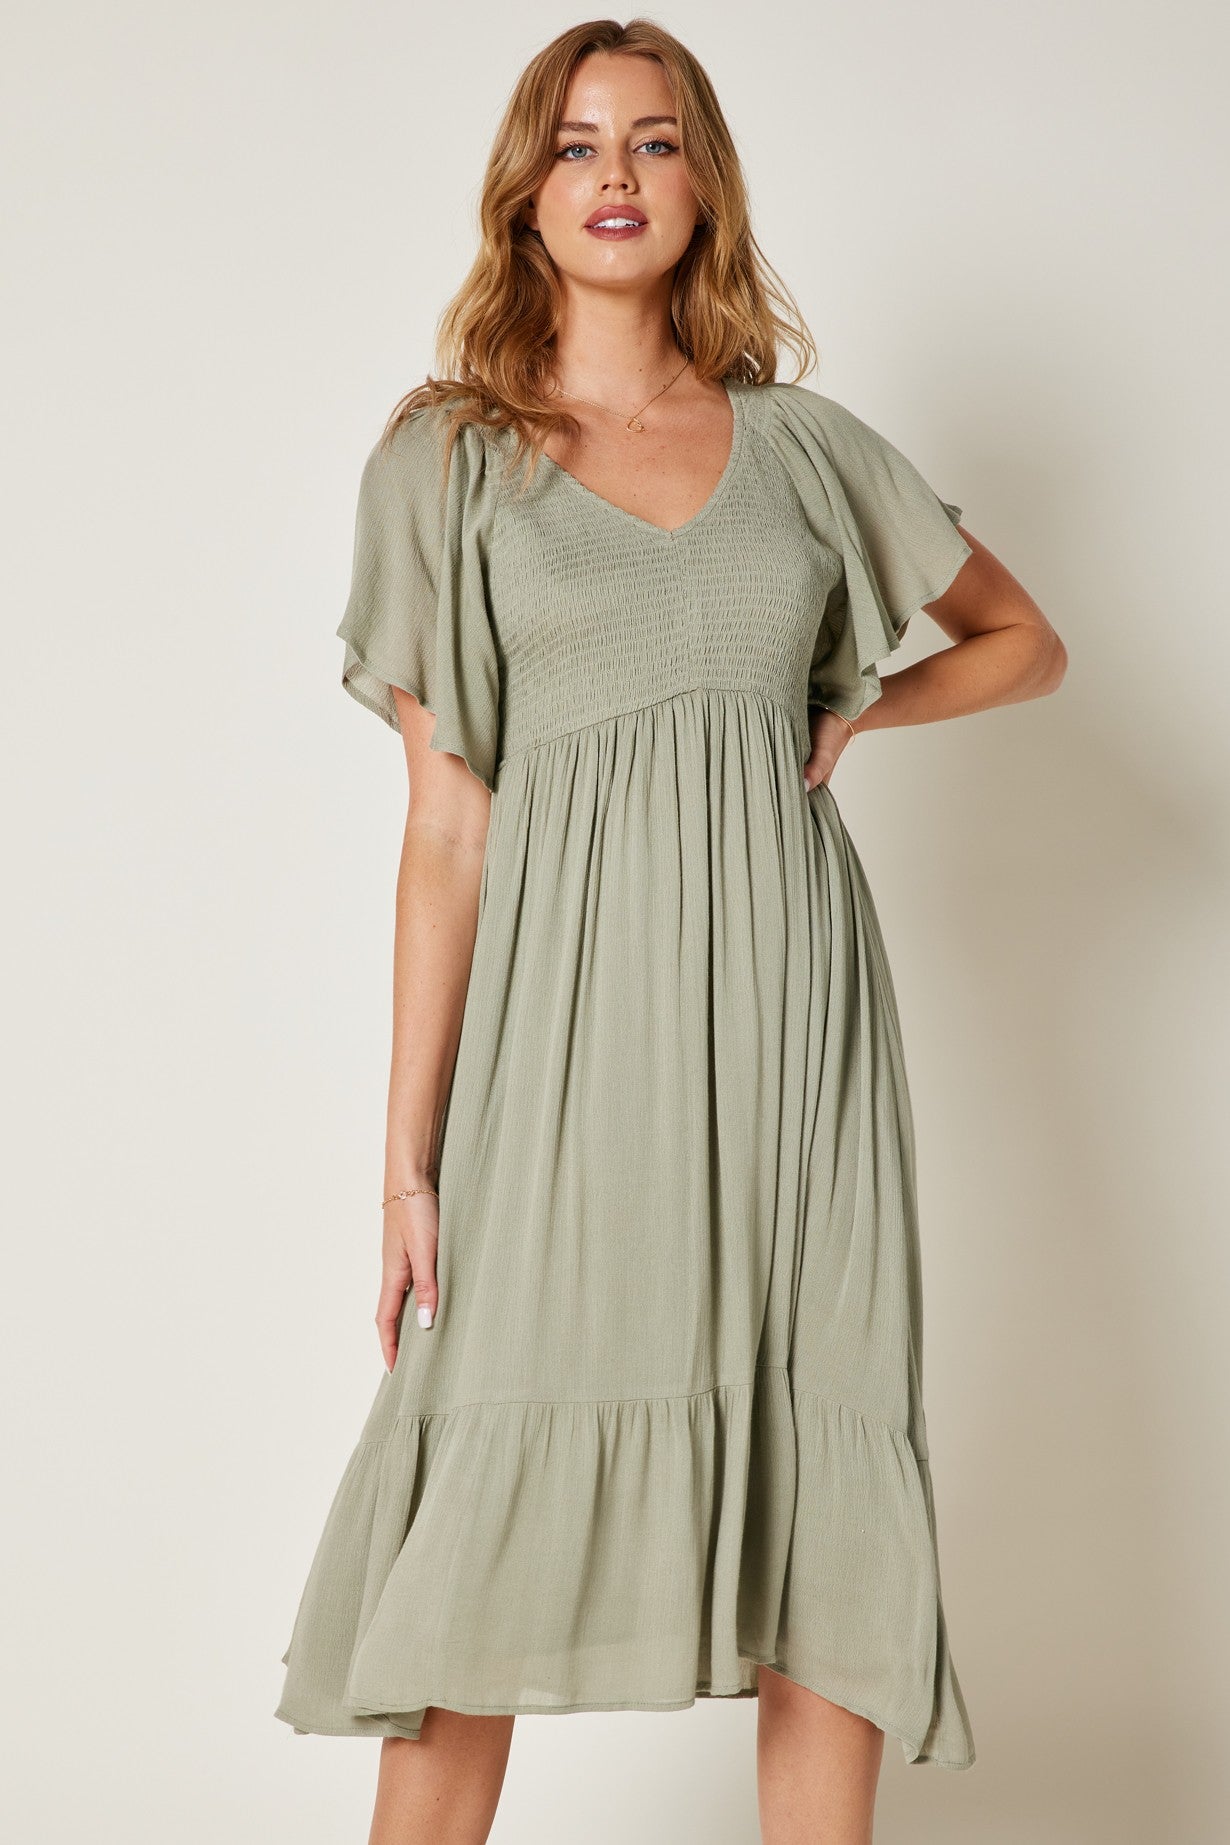 Ruffle Sleeve Smocked Dress in Light Olive